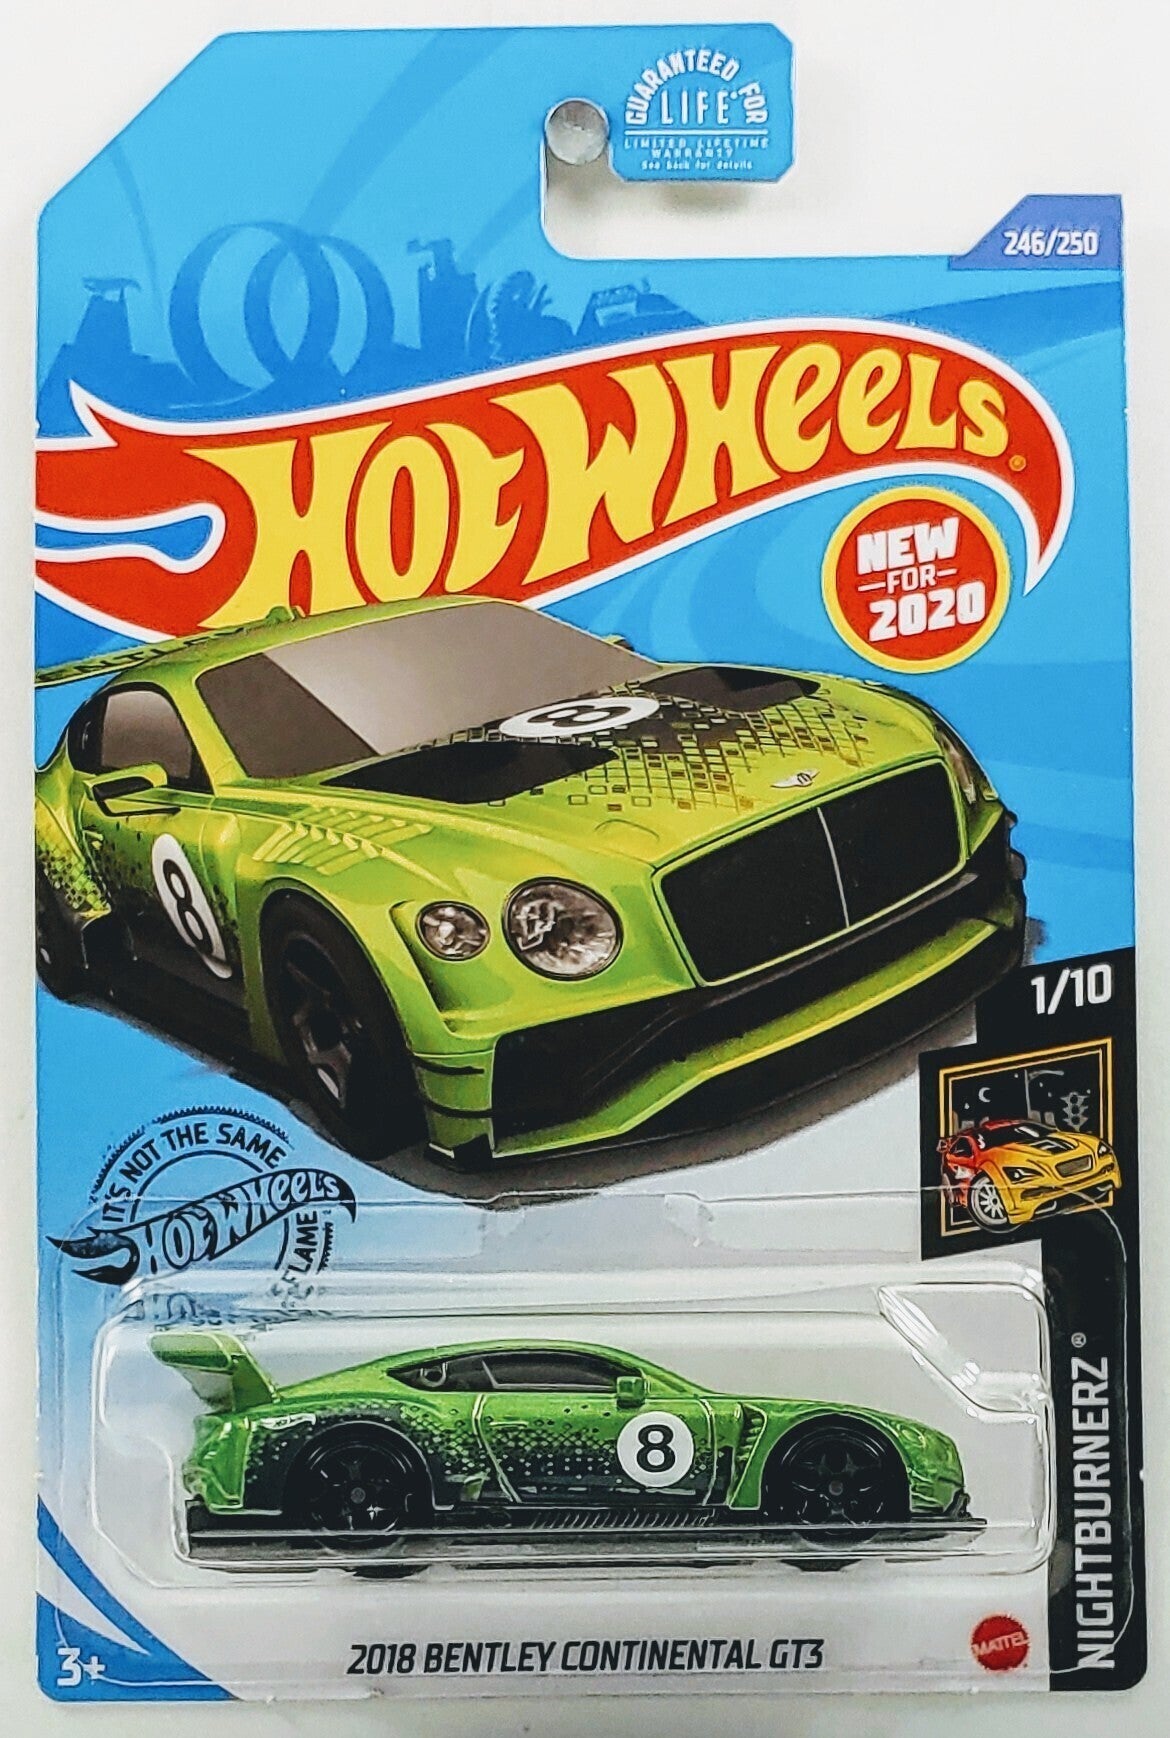 Hot Wheels 2020 - Collector # 246/250 - Nightburnerz 1/10 - New Models - 2018 Bentley Continental GT3 - Green - USA Card